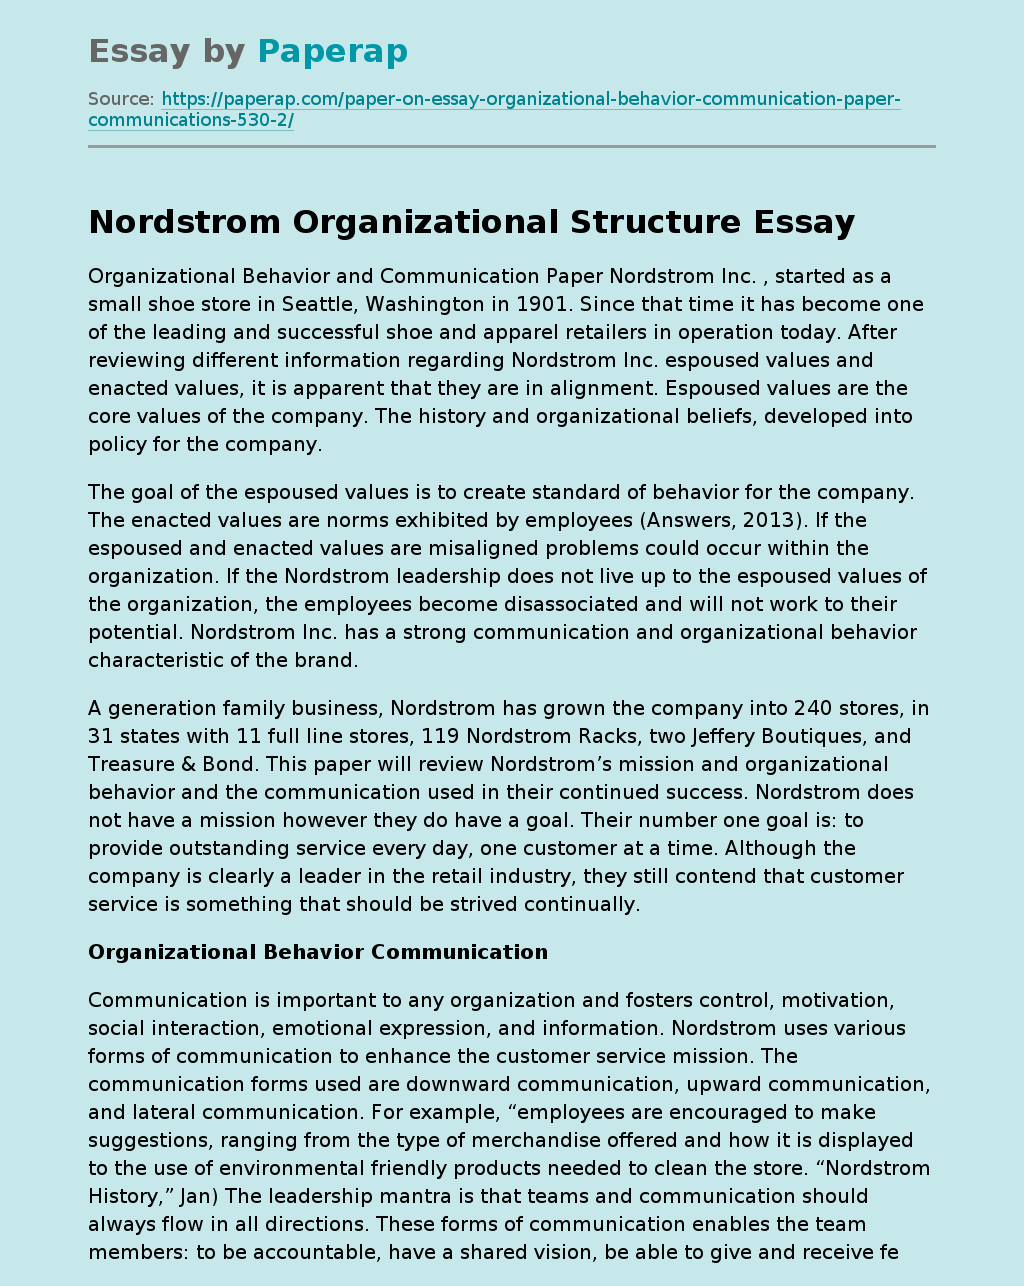 Nordstrom Organizational Structure